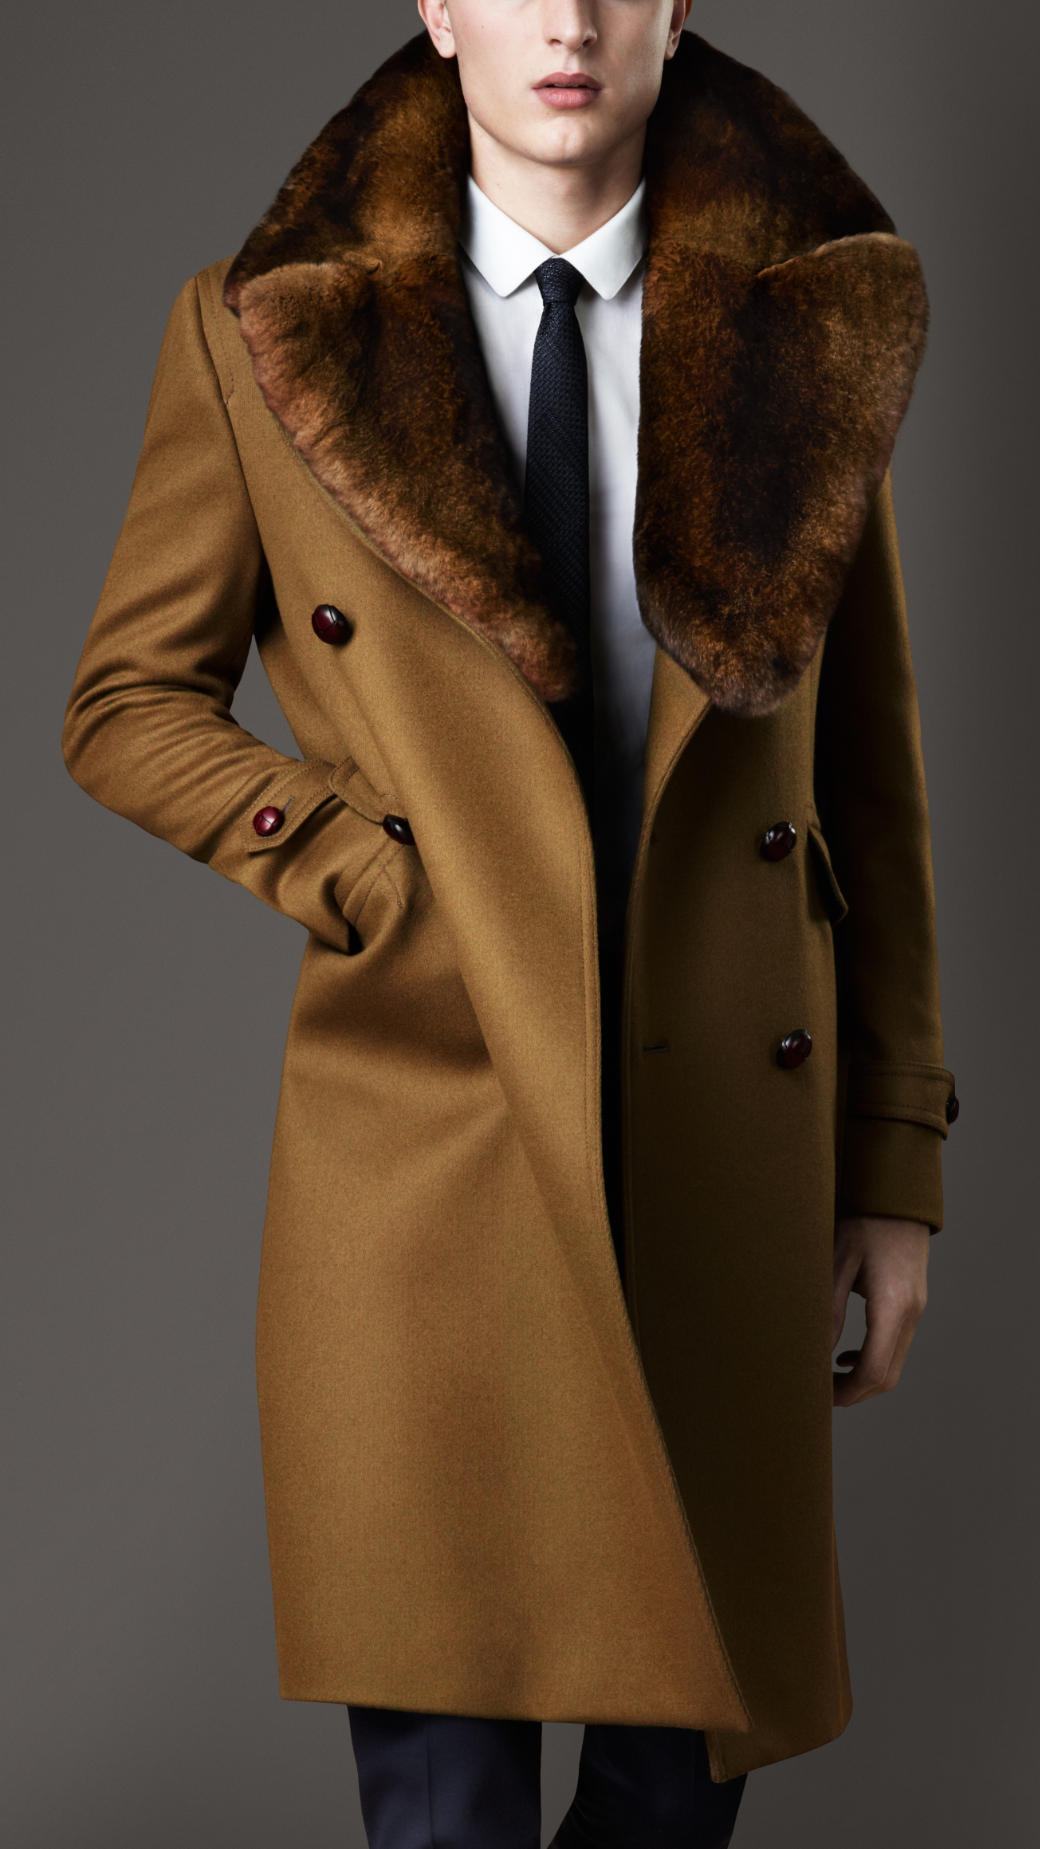 miritary coat real fur New Arrival 9800円引き zicosur.co